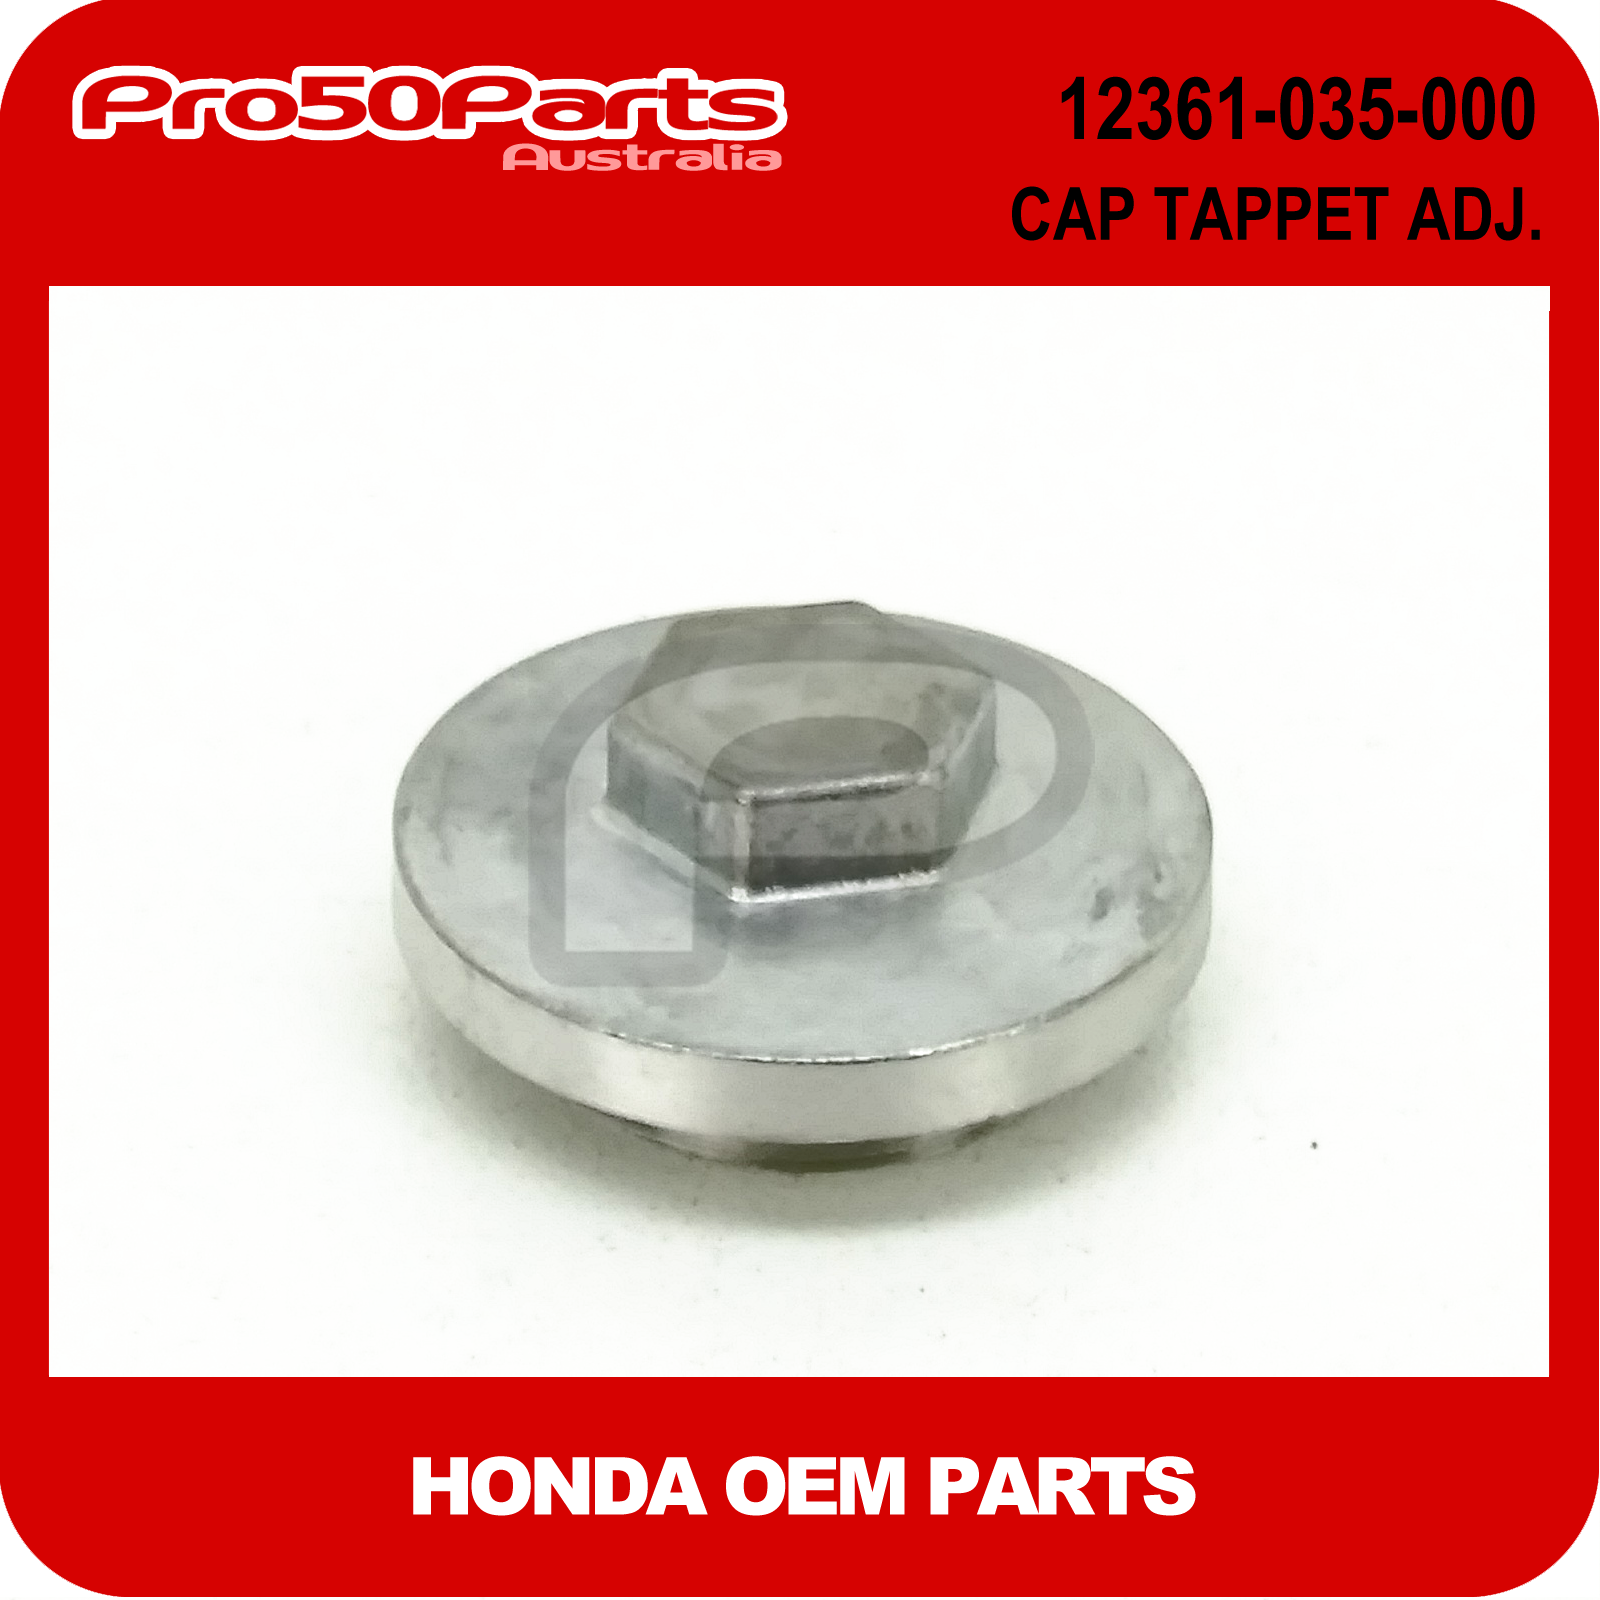 Honda OEM Part 12361-035-000